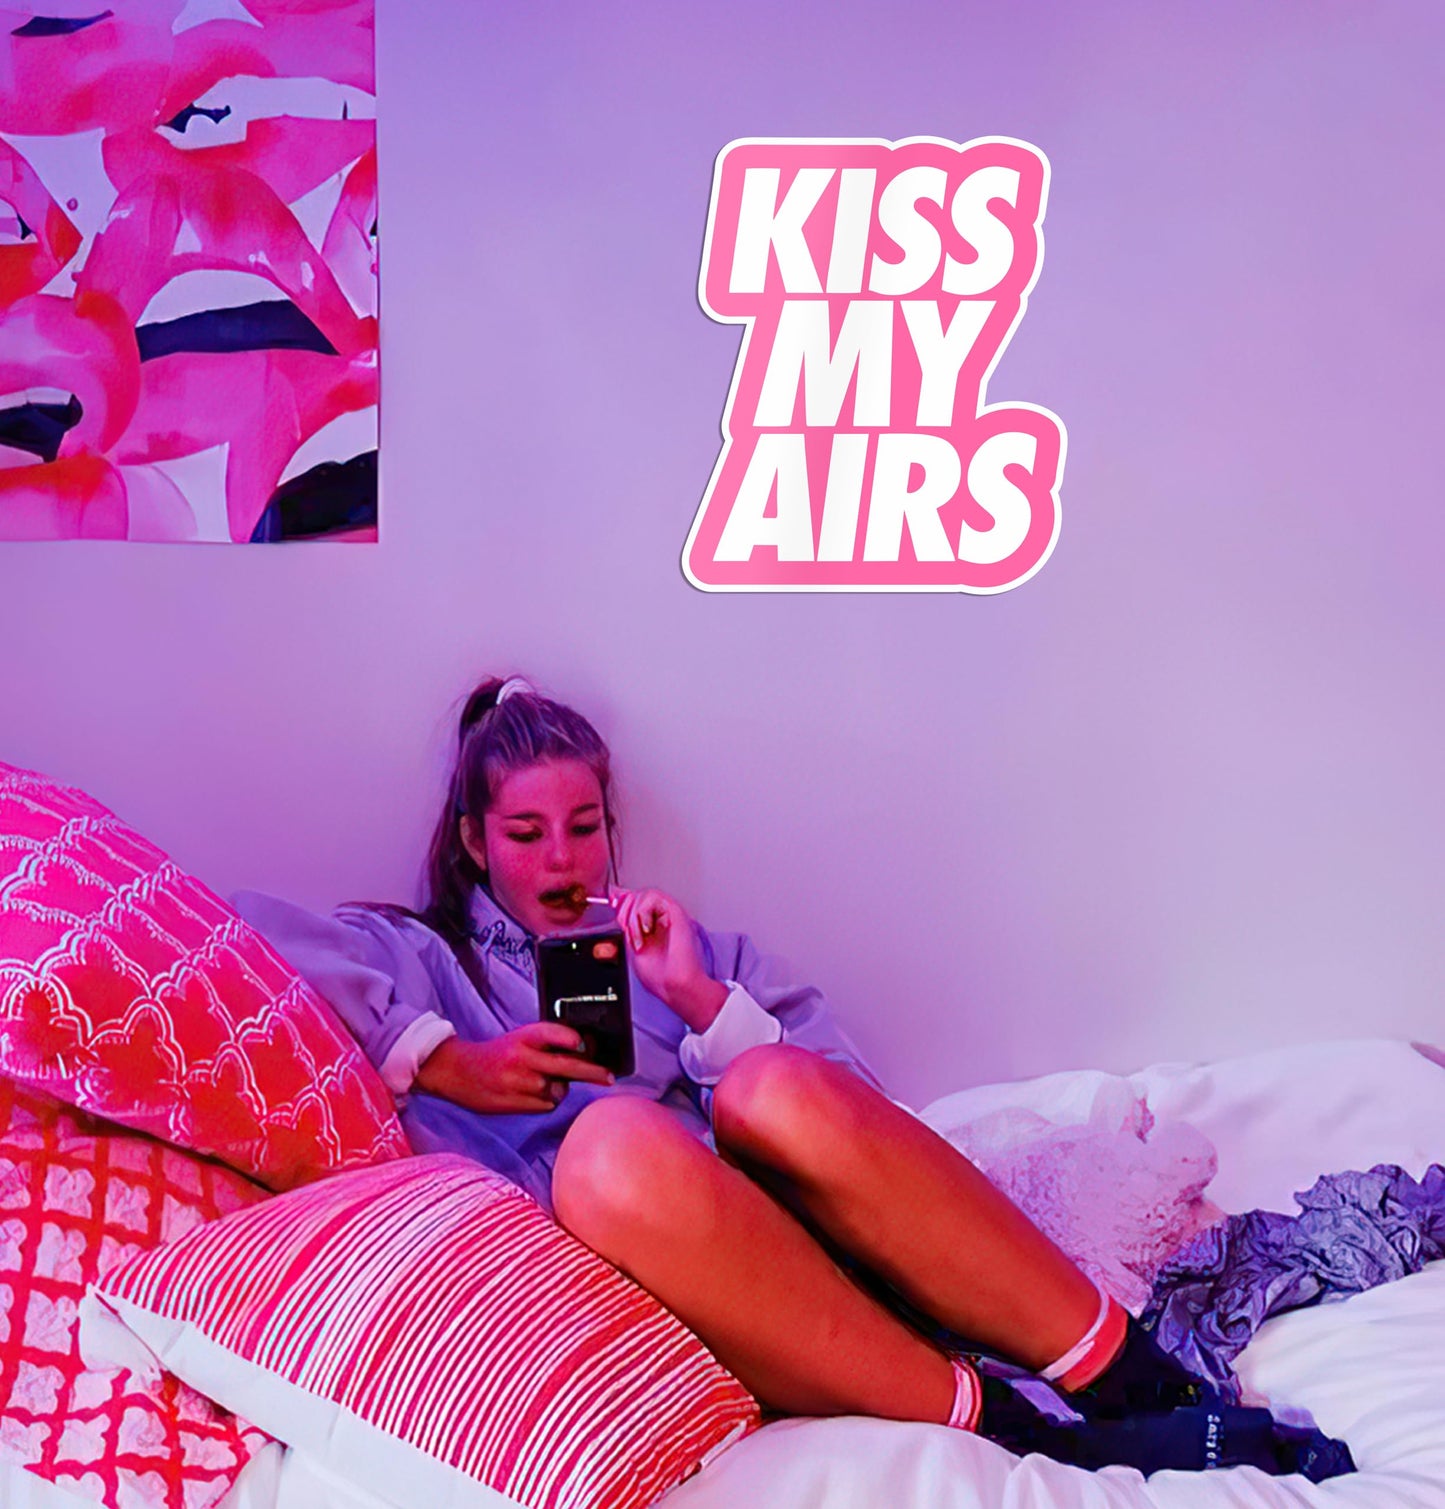 Sign Decor - Kiss My Airs (Pink)